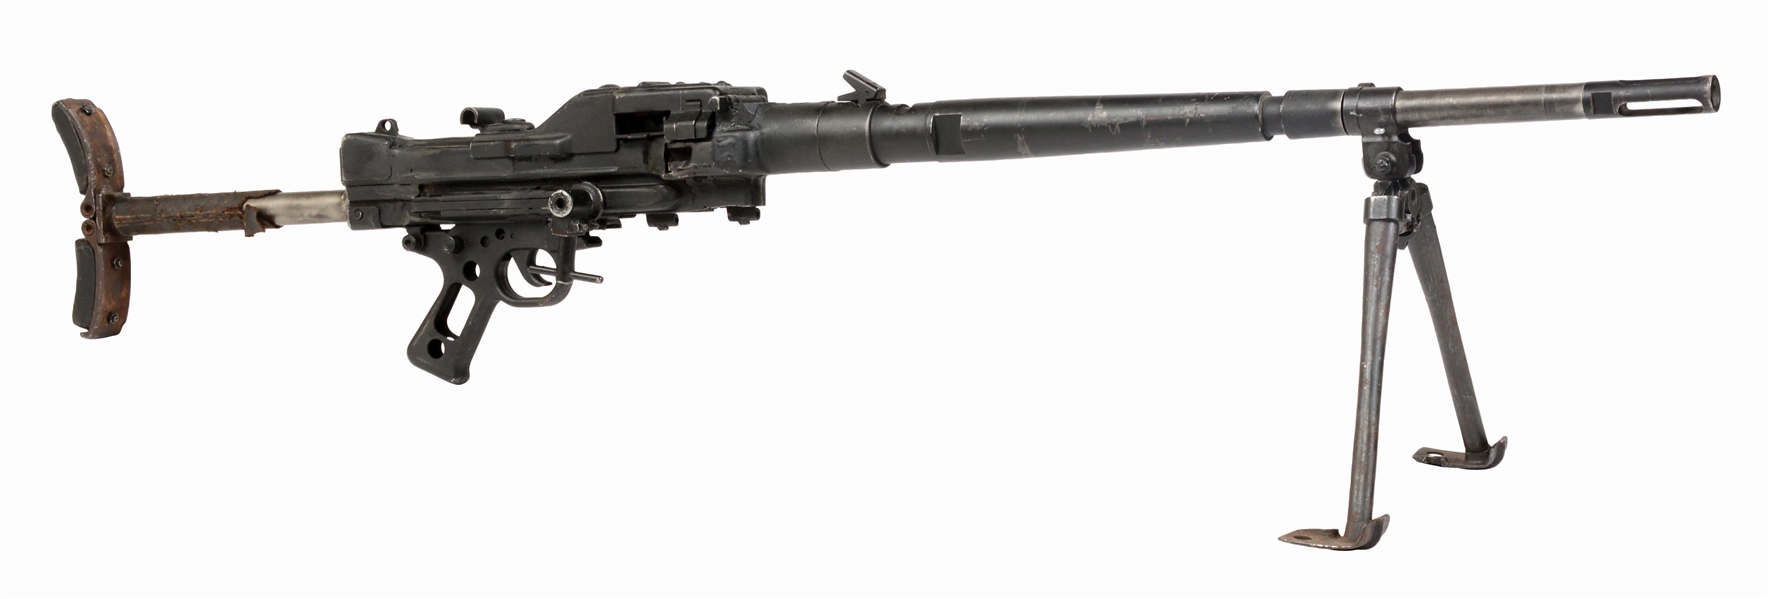 FRENCH MODEL AA-52 DISPLAY MACHINE GUN.